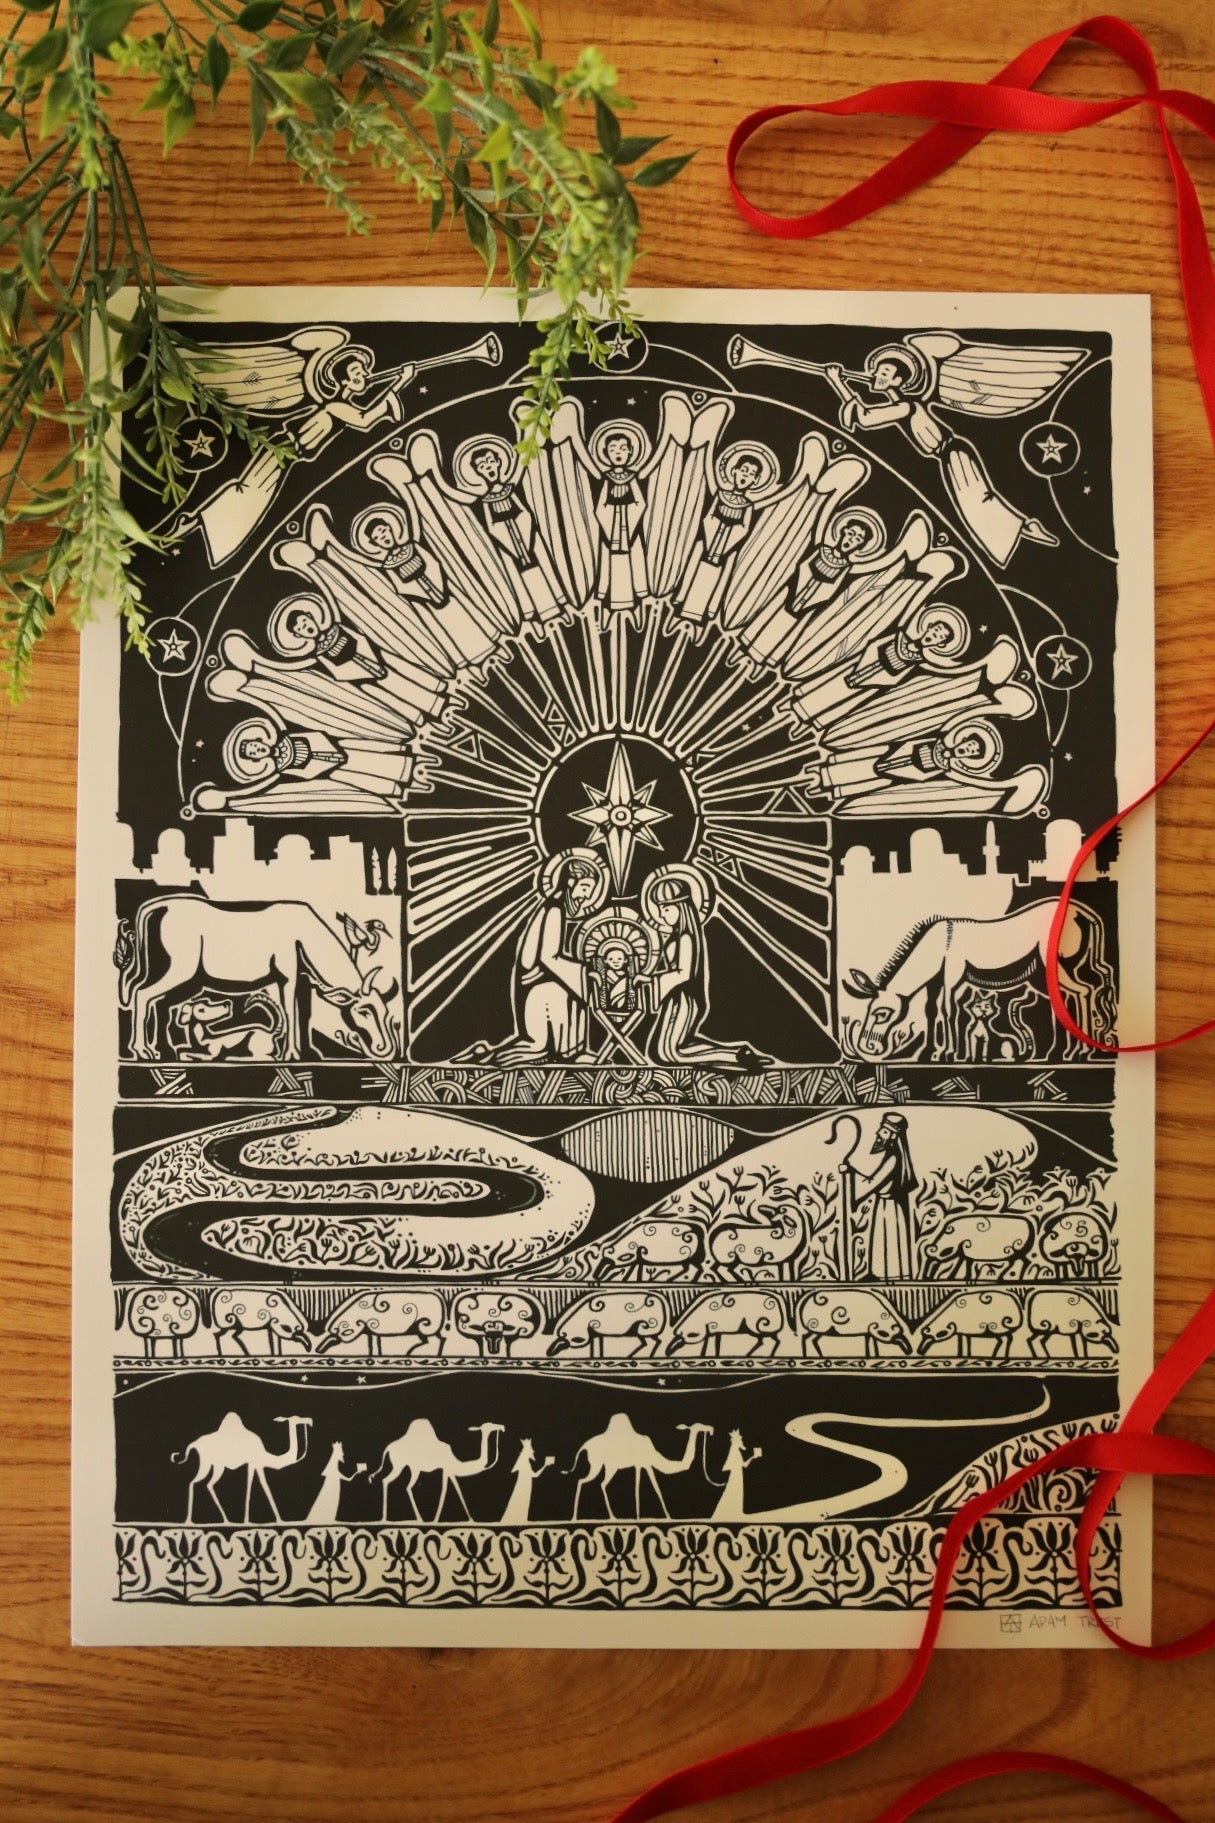 Illustrated Christmas Nativitiy Scene By Adam Trest